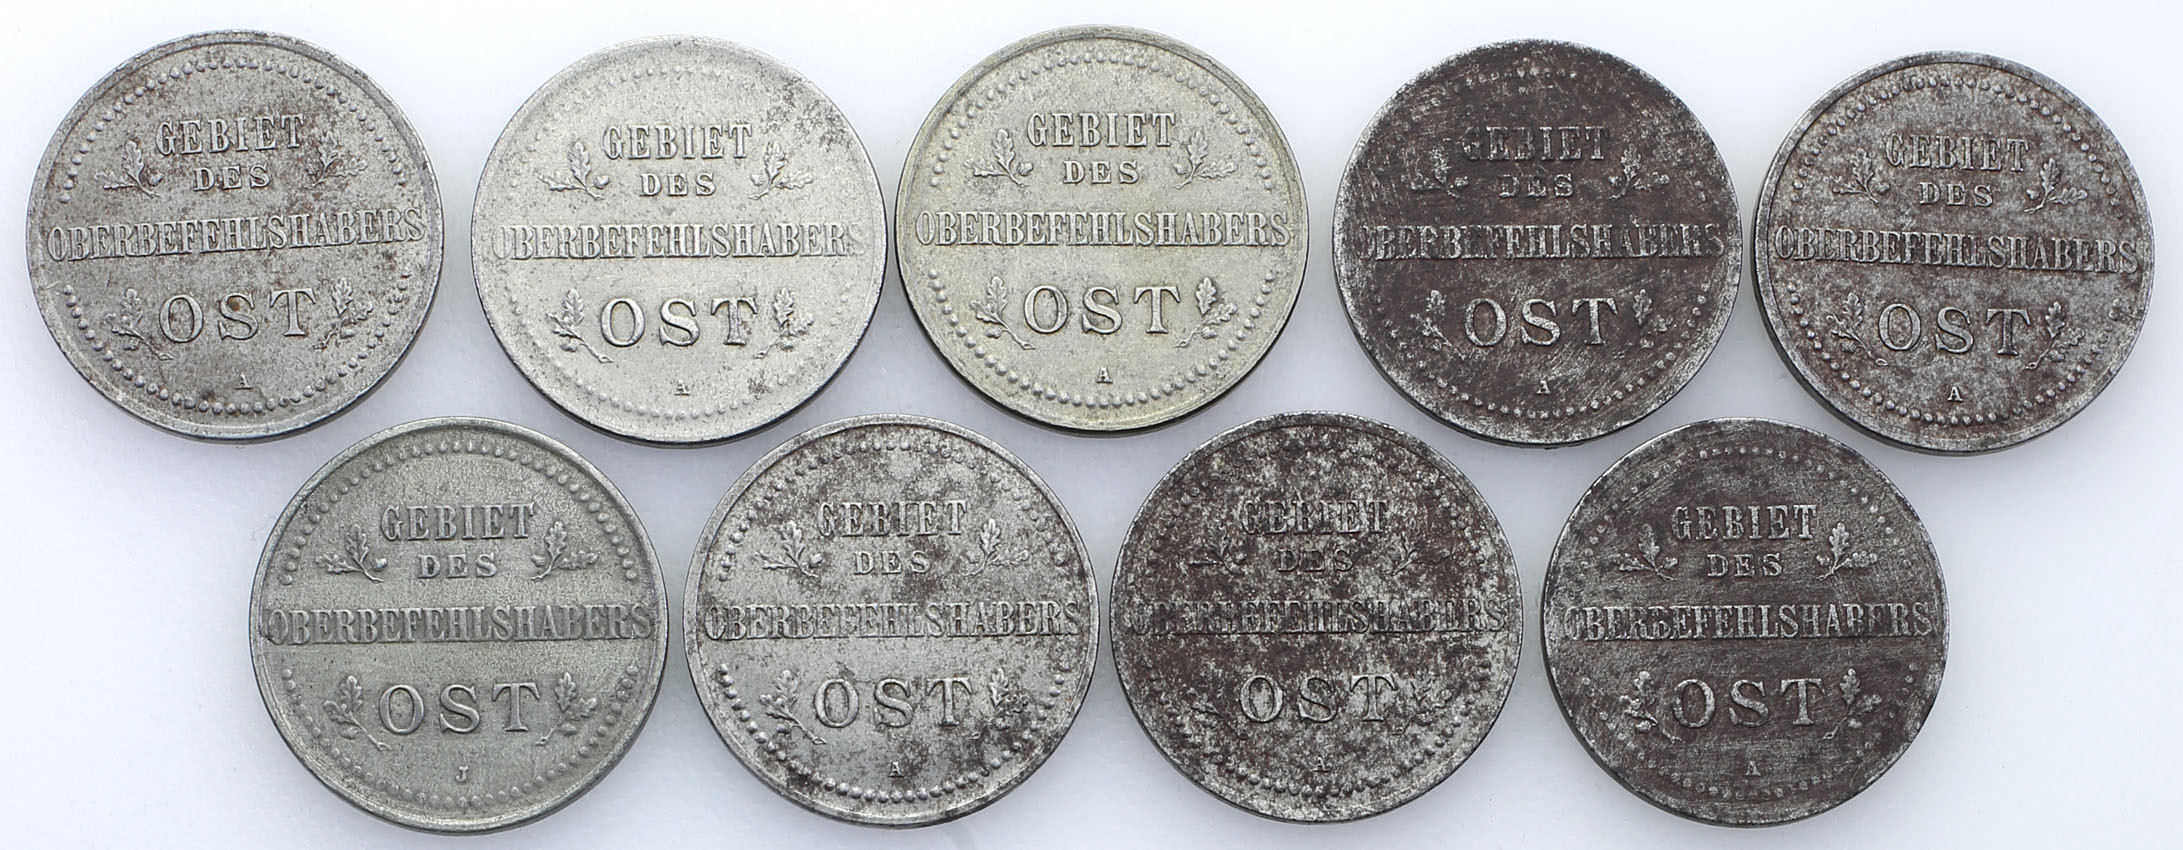 Polska, OST. 3 kopiejki 1916 - zestaw 9 monet